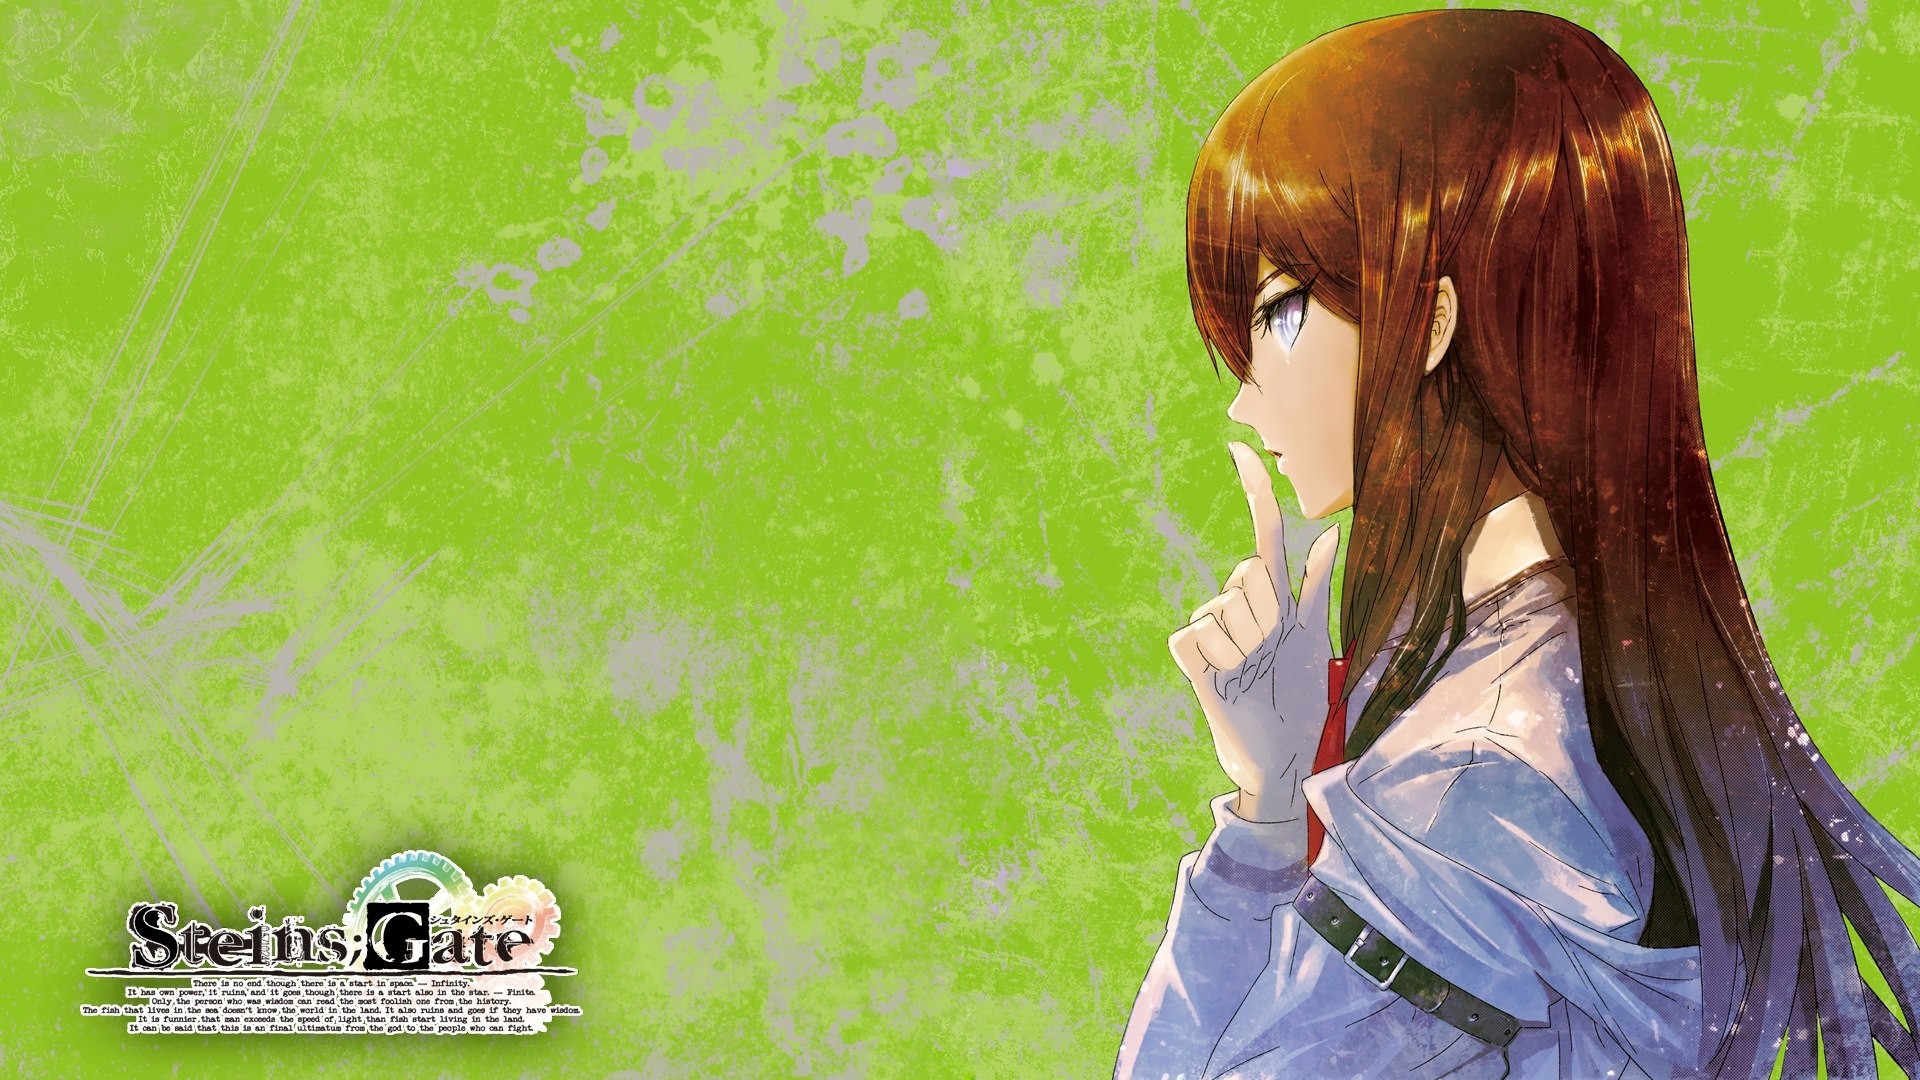 Anime 1920x1080 anime anime girls Steins;Gate redhead Makise Kurisu white shirt tie blue eyes green background face profile long hair